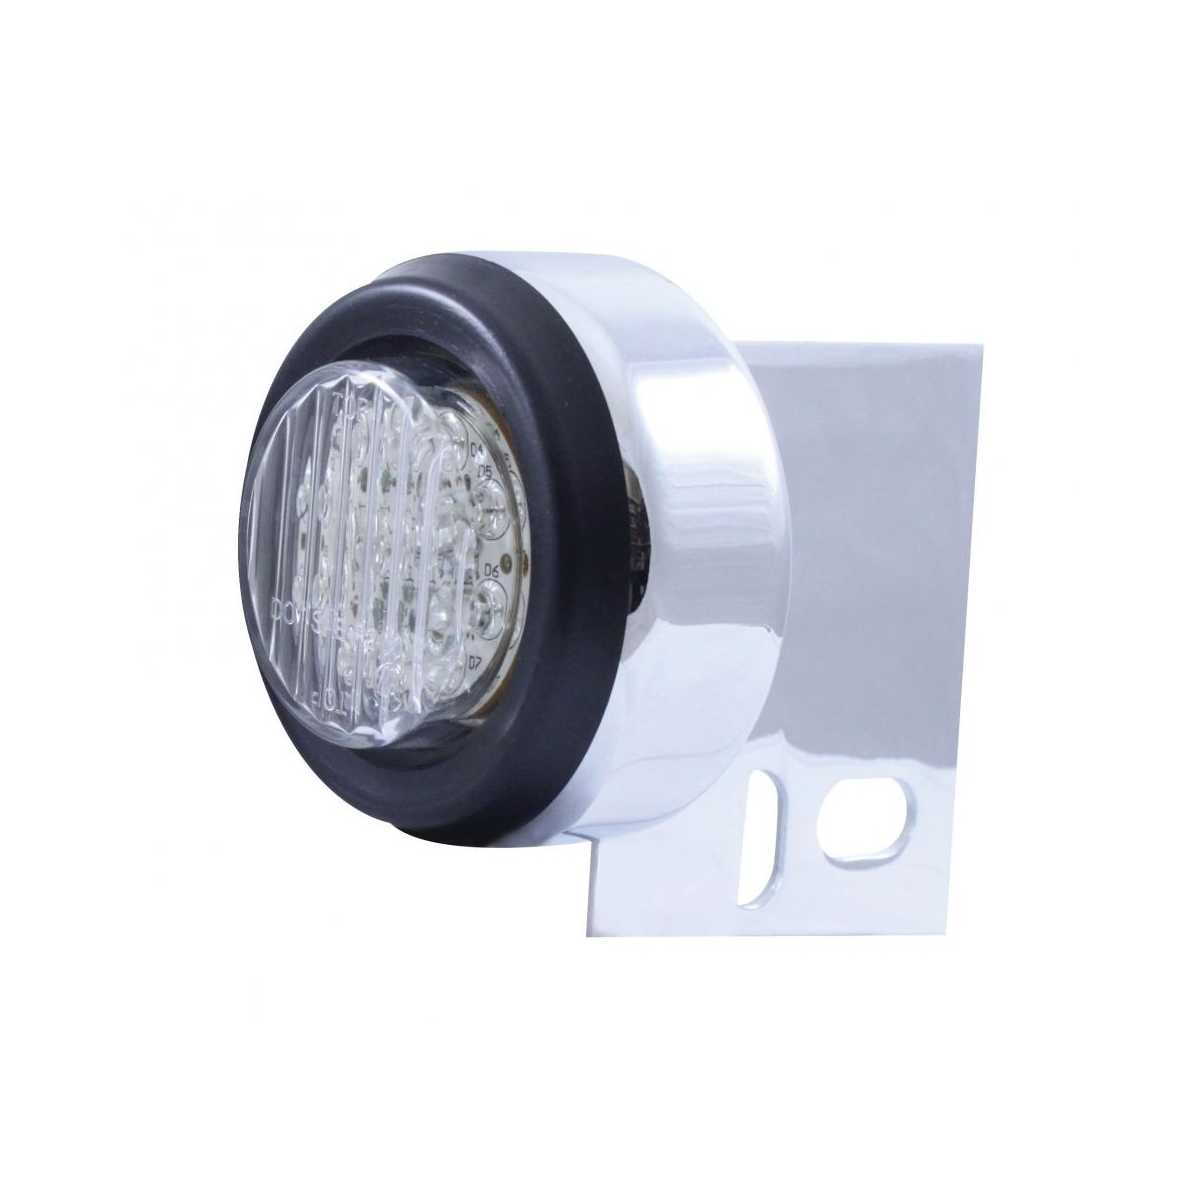 9 LED Universal Mud Flap Hanger End Light w/ Grommet - Red LED/Clear Lens